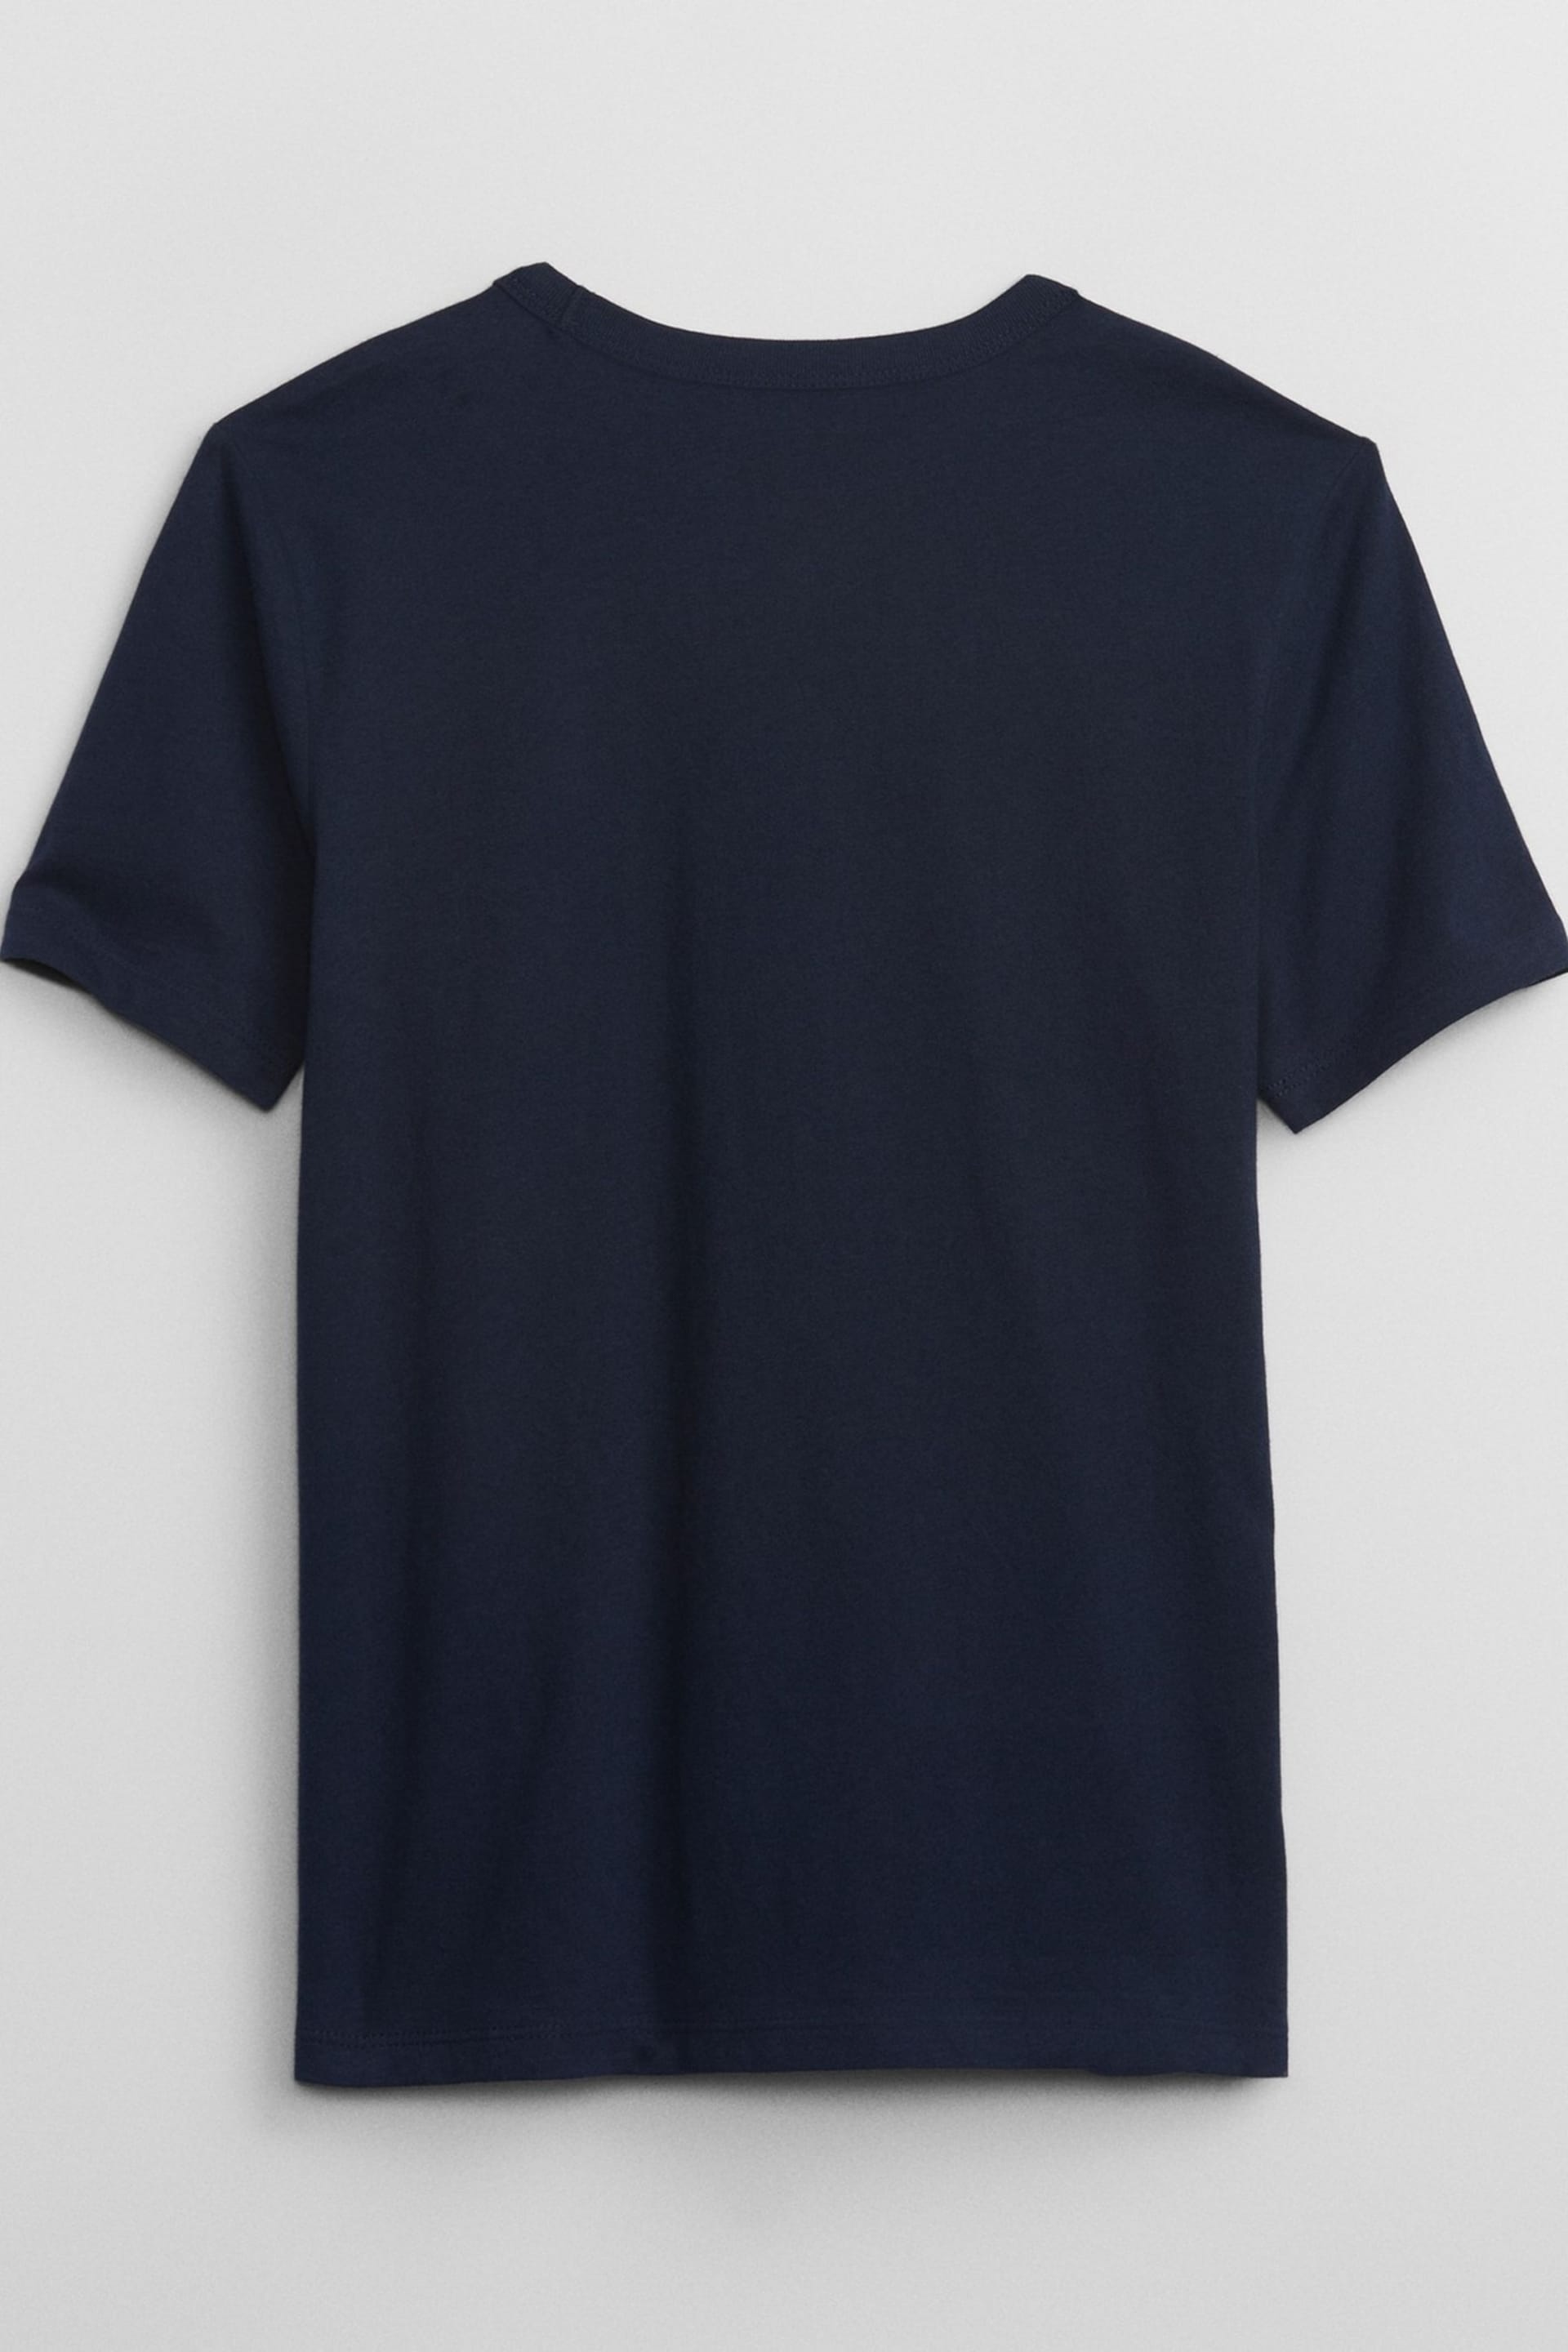 Gap Blue Cotton Graphic Short Sleeve Crew Neck T-Shirt (4-13yrs) - Image 2 of 2